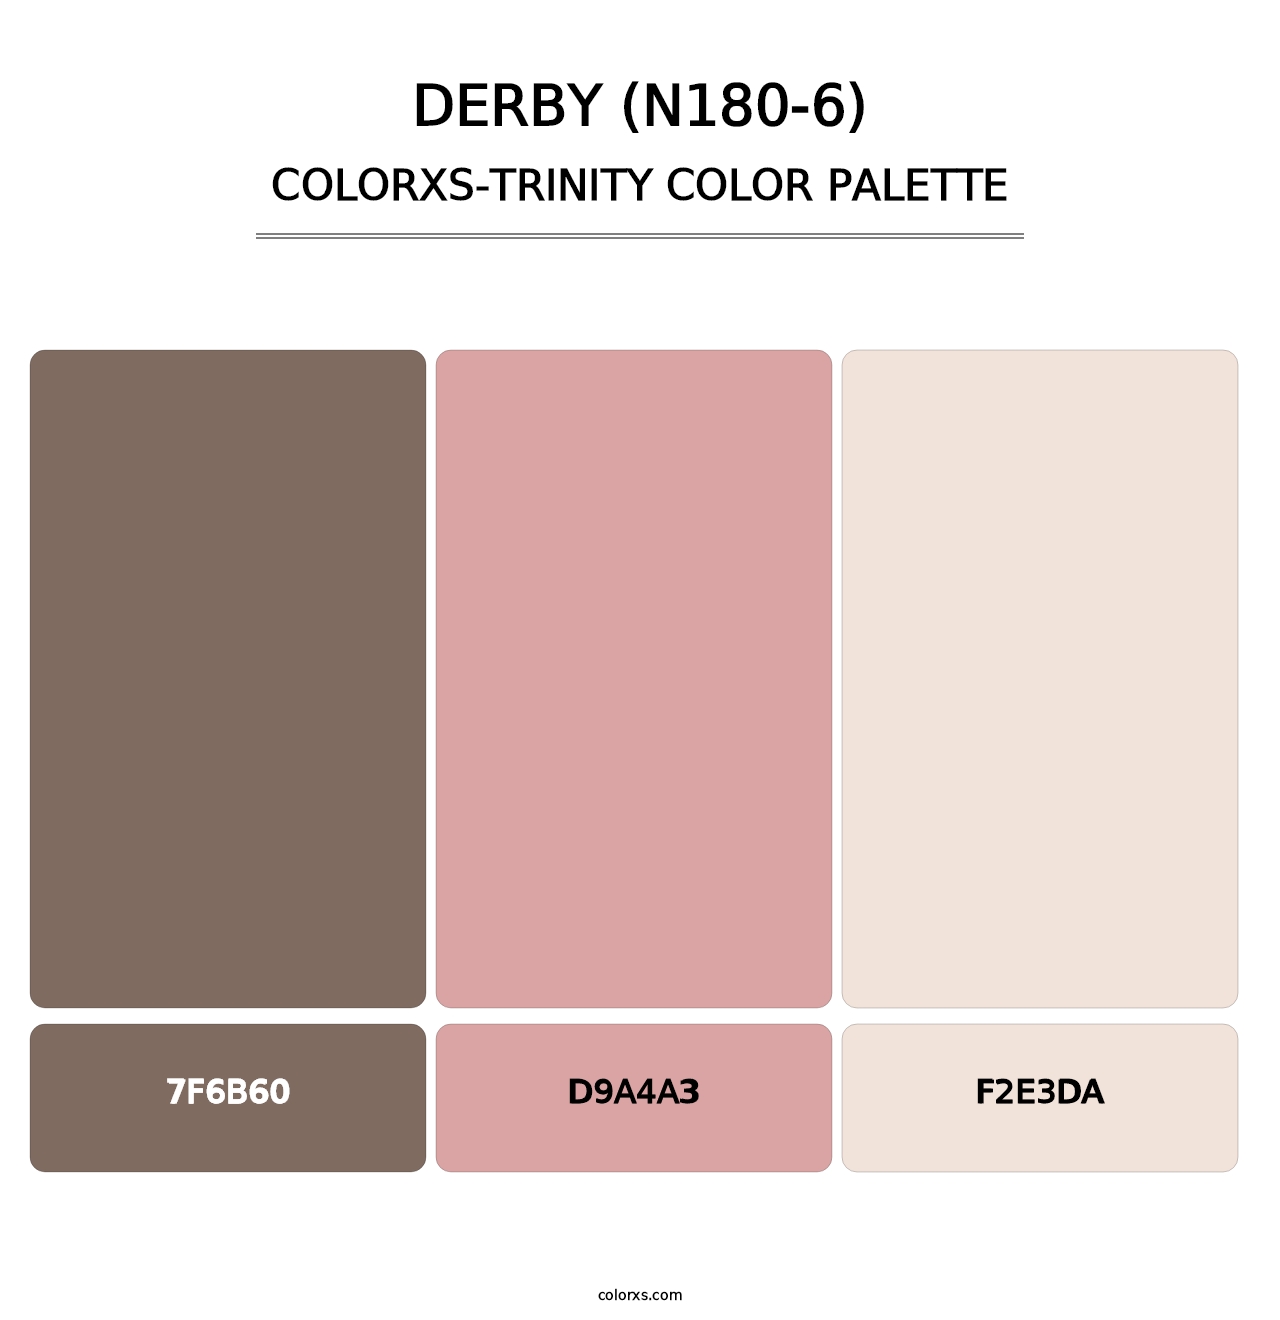 Derby (N180-6) - Colorxs Trinity Palette